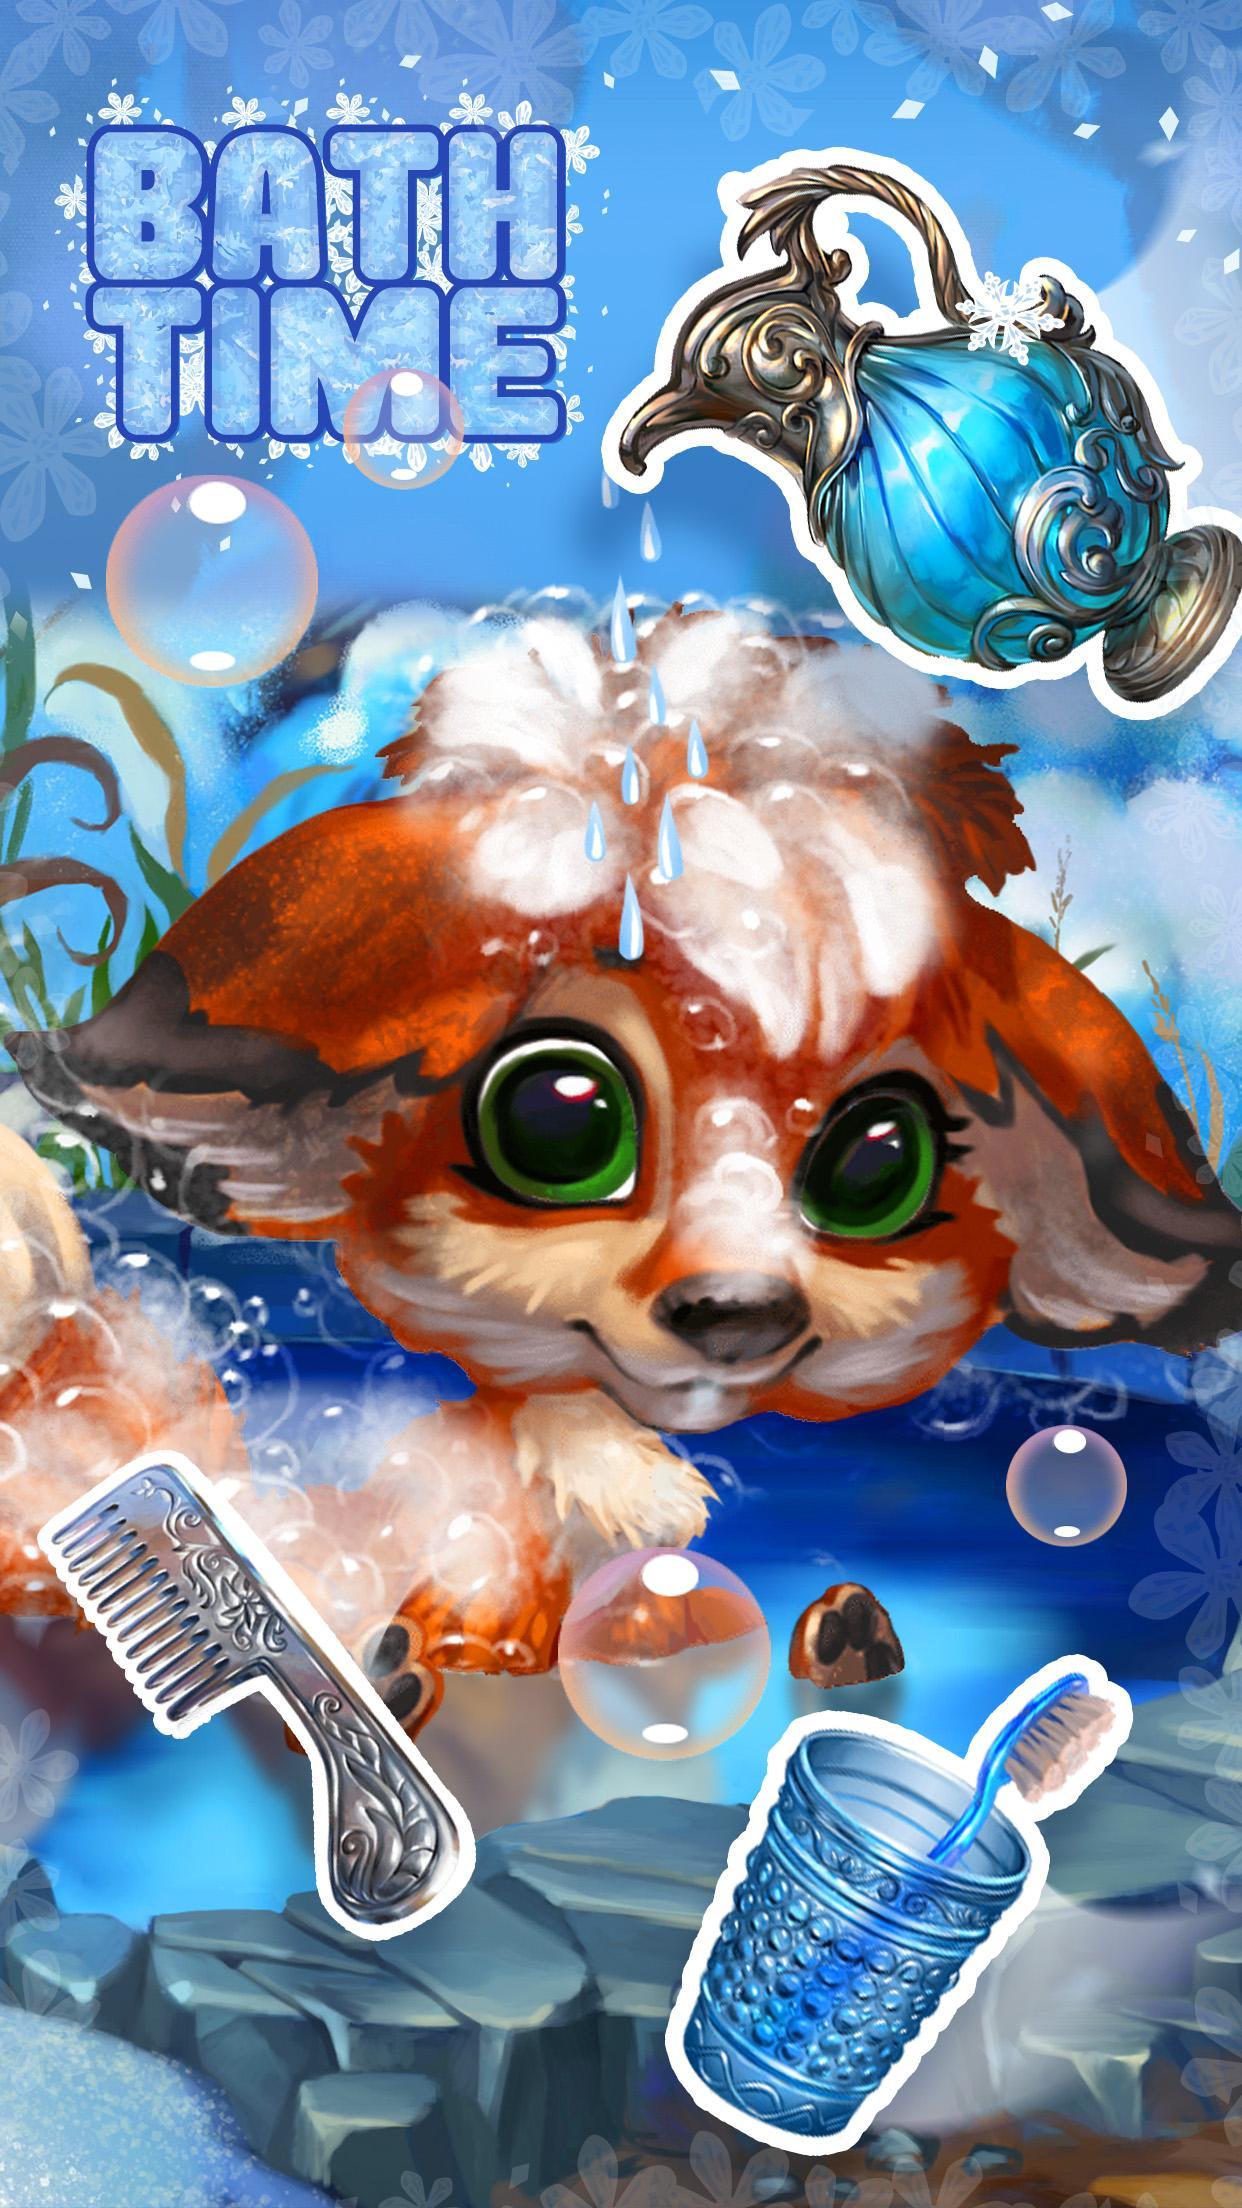 Winter Fairy: My Little Foxのキャプチャ